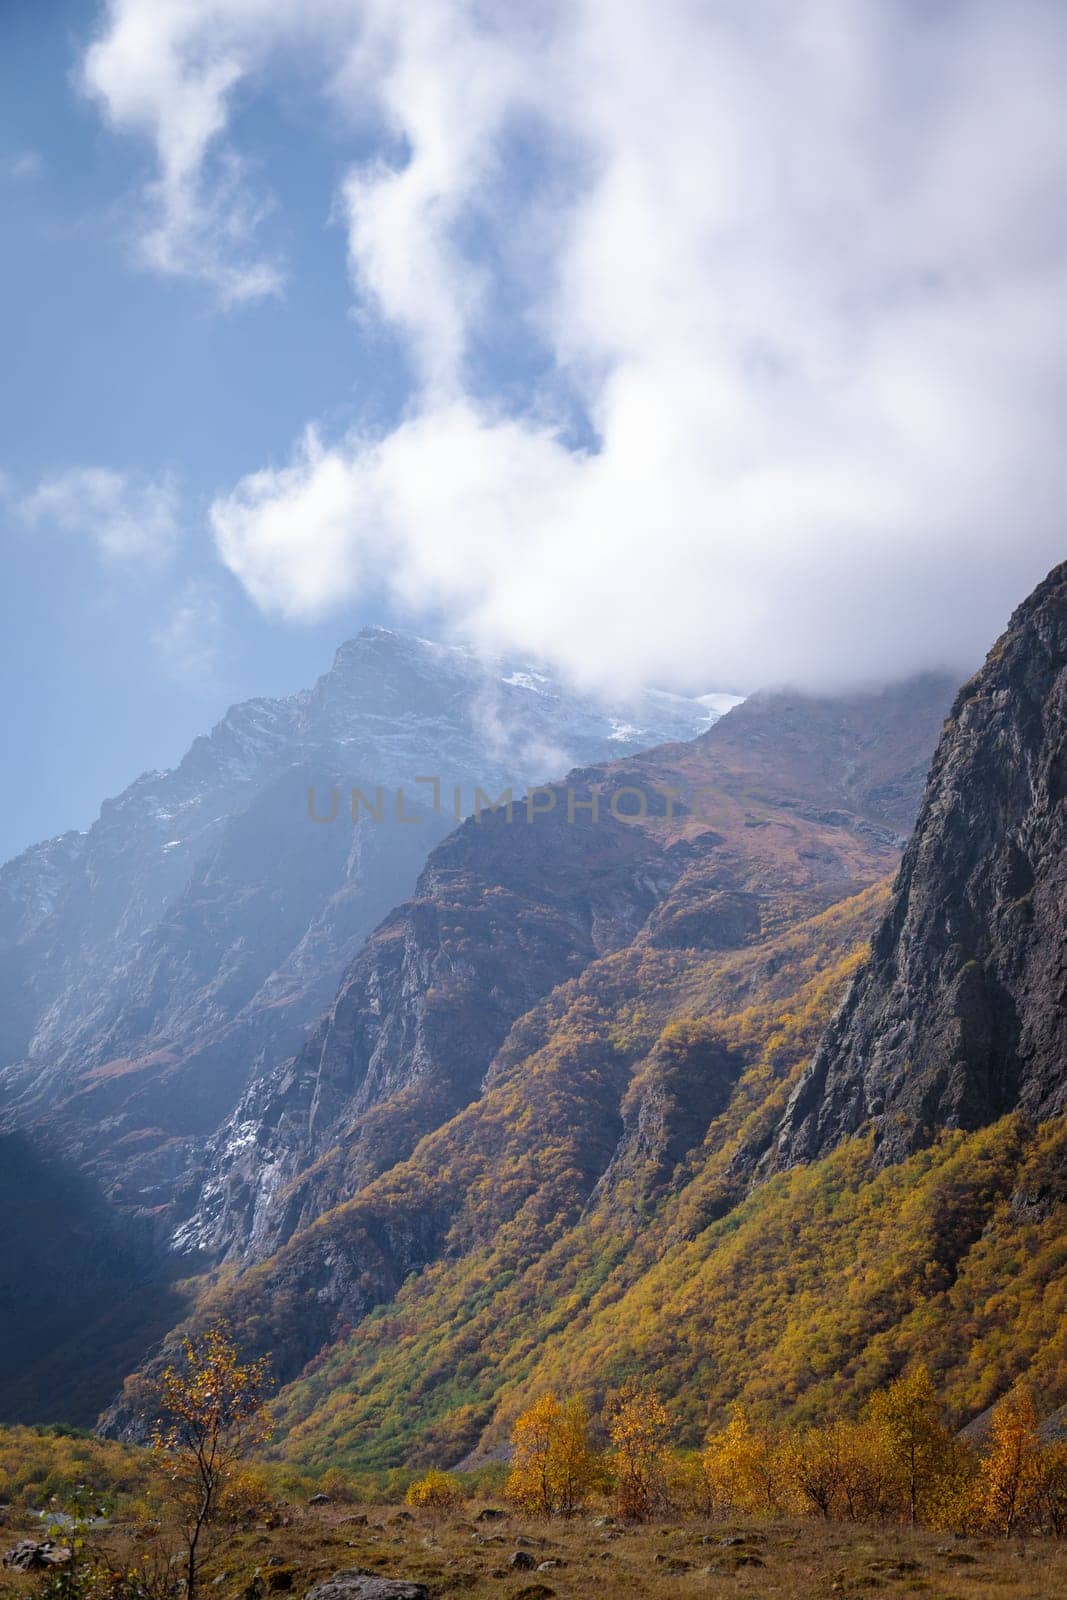 Autumn mountain landscape by Yurich32